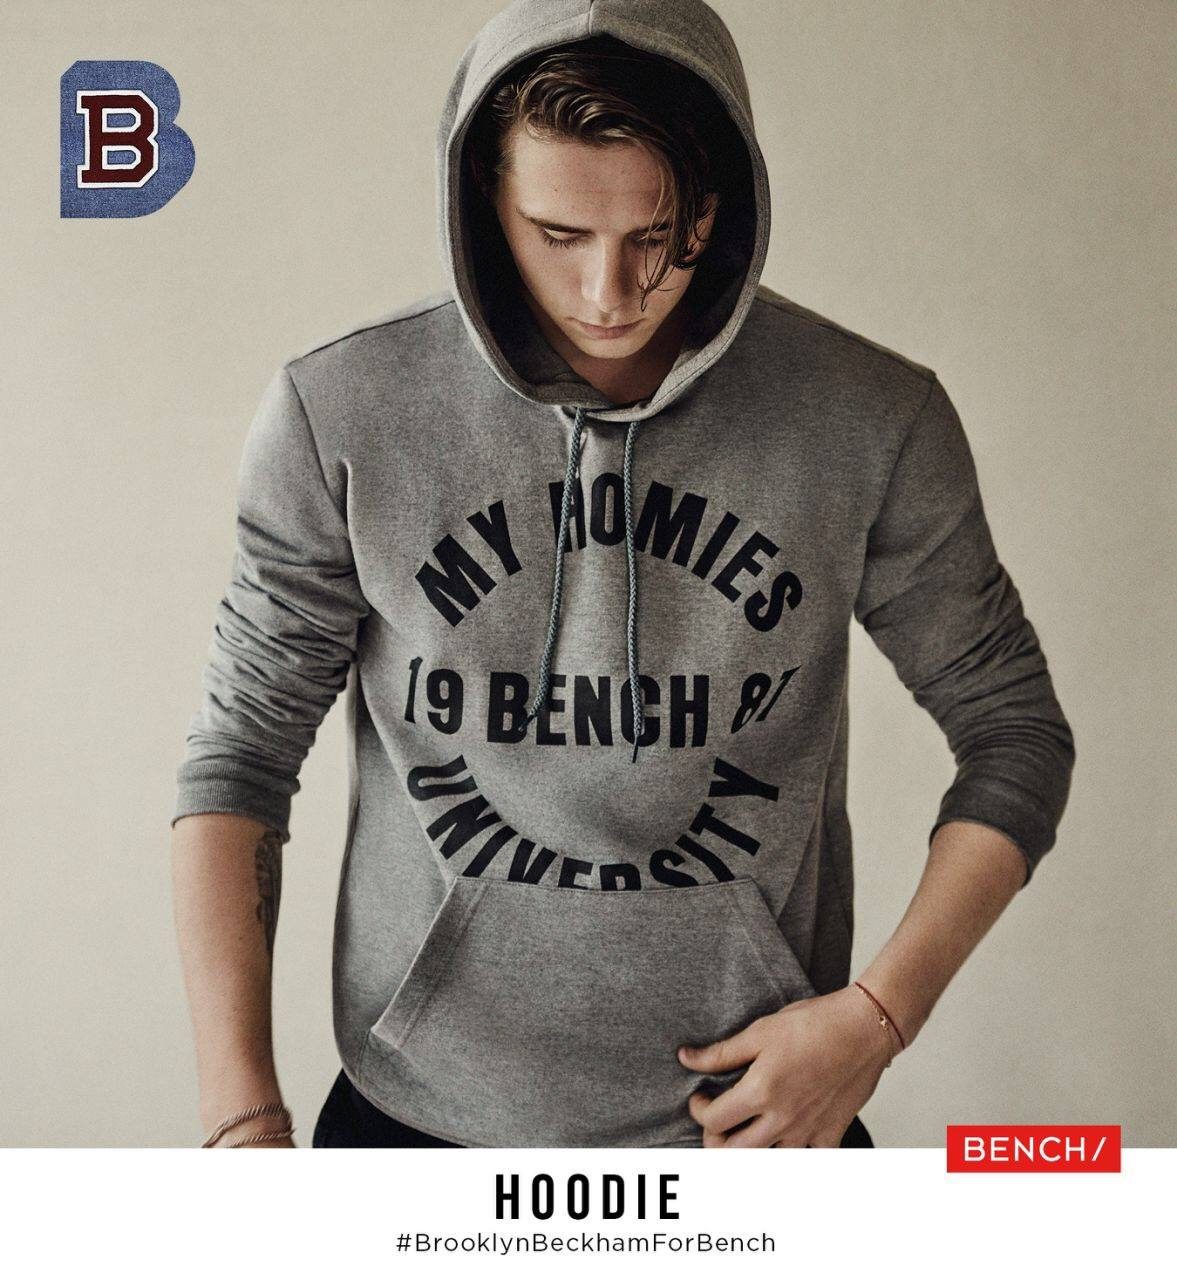 5 facts about new Bench endorser Brooklyn Beckham